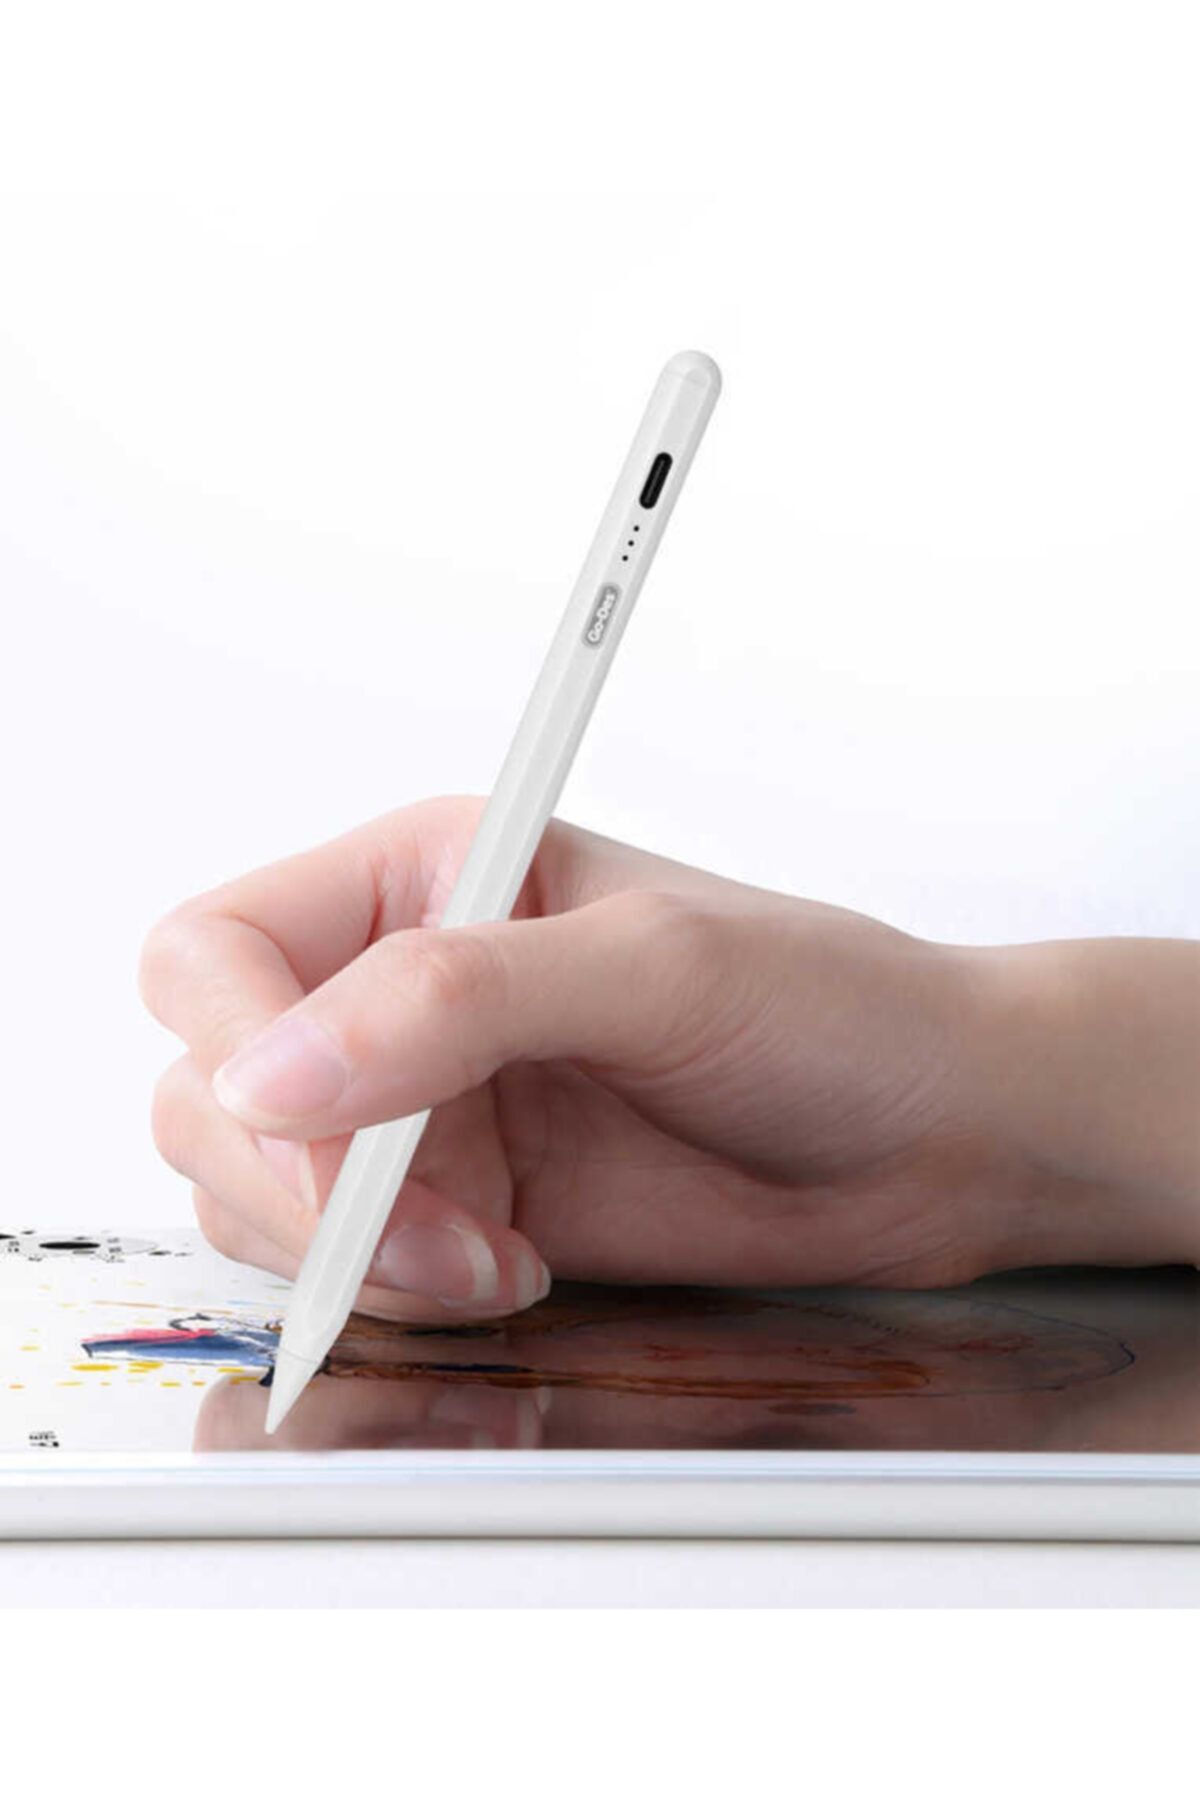 Apple Ipad Pro 12.9 Inç (2. Nesil) Dokunmatik Kalem Hassas Çizim Ve Not Tutmak Için Palm Free Özellikli